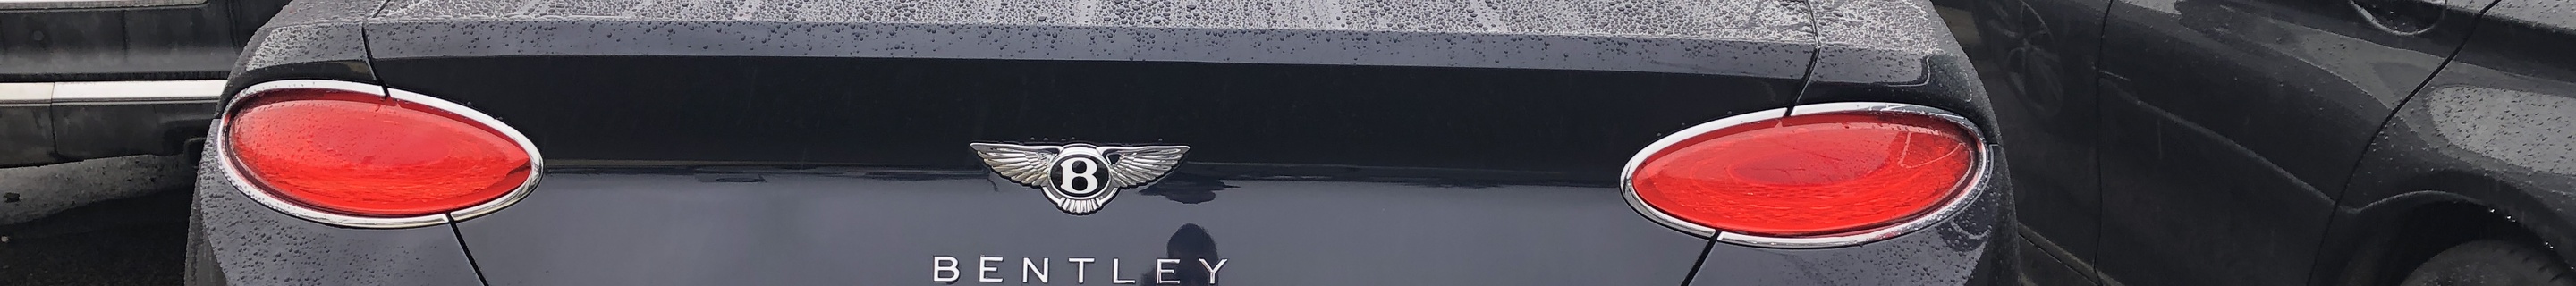 Bentley Continental GT 2018 Mulliner